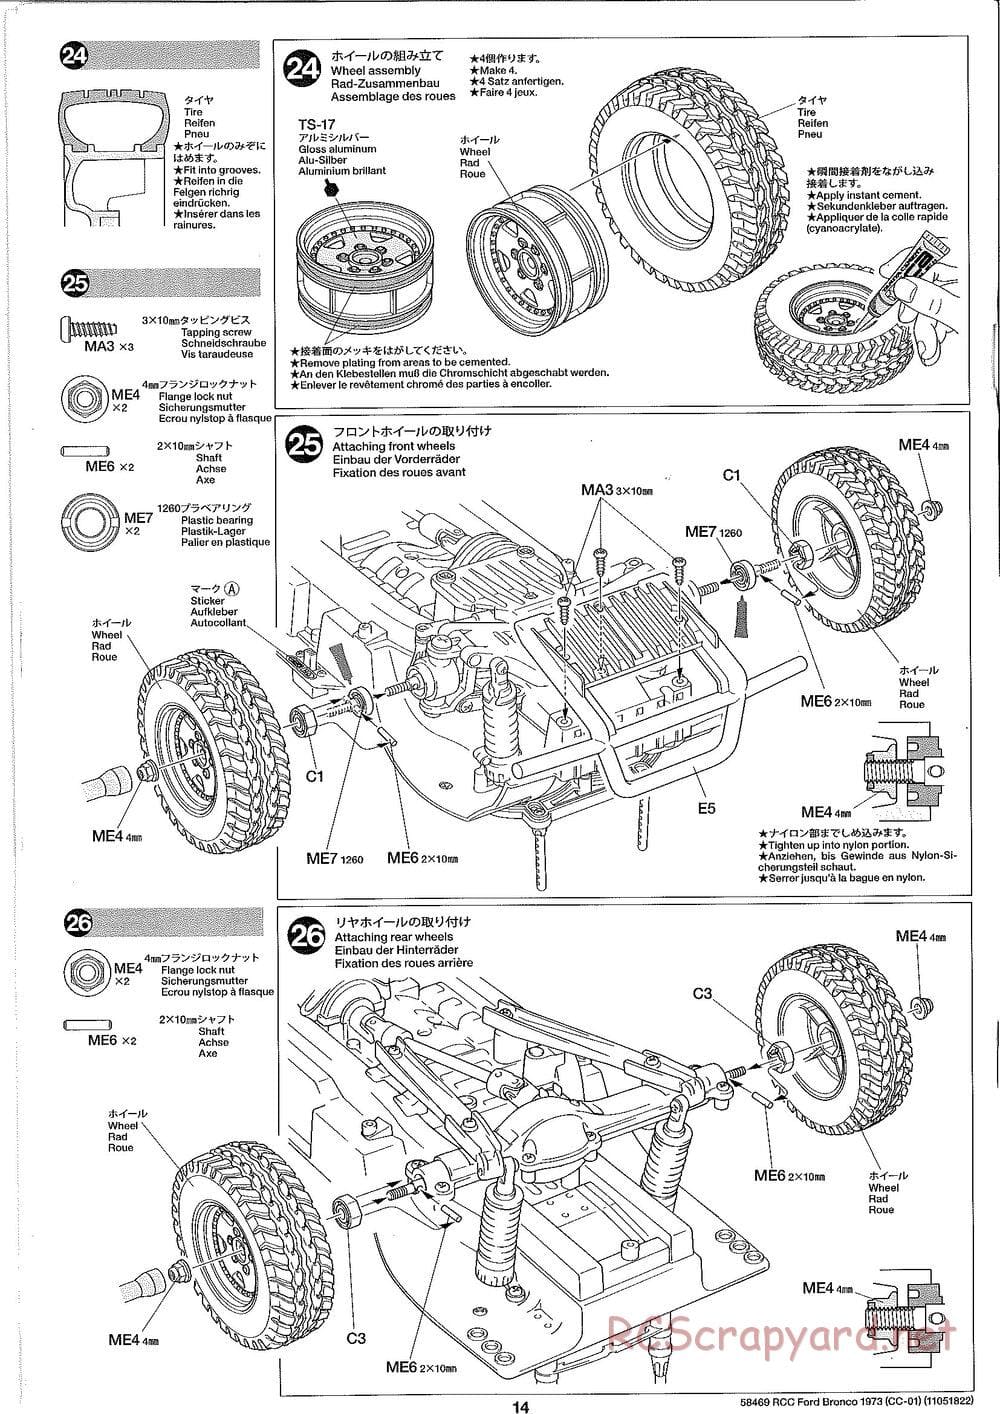 Tamiya - Ford Bronco 1973 - CC-01 Chassis - Manual - Page 14